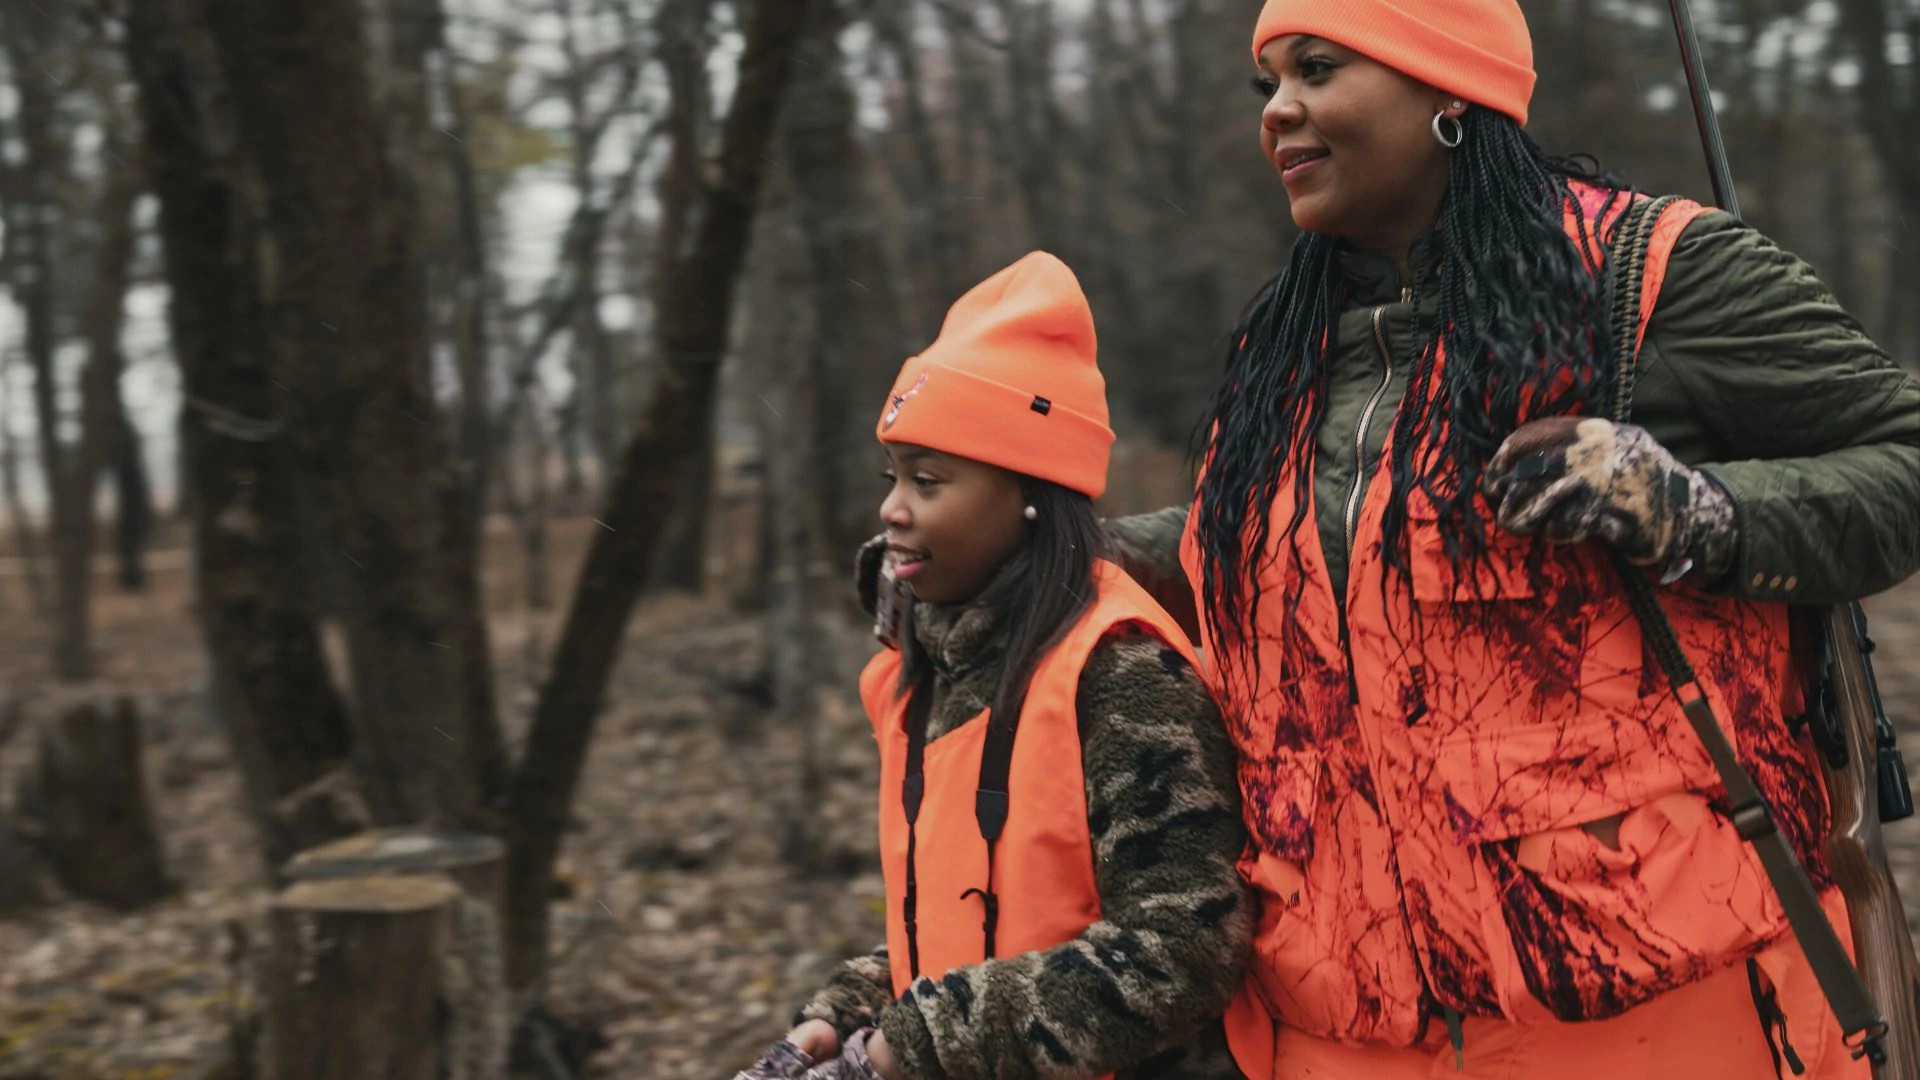 two women hunting together, wearing blaze orange